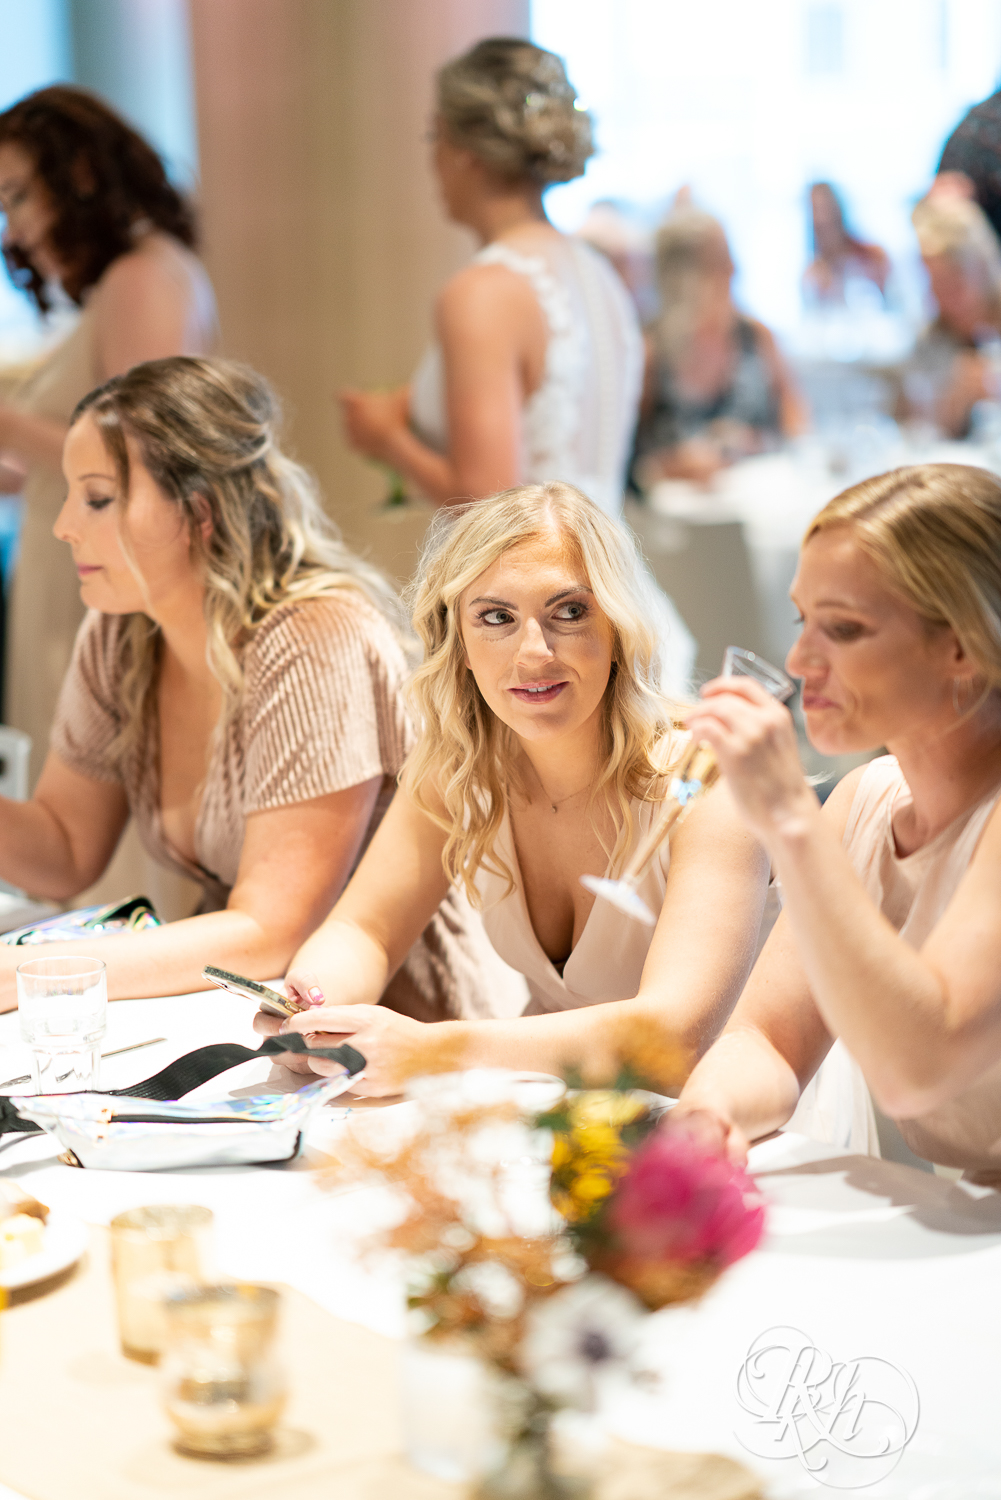 Bridesmaids converse during wedding reception at head table at Saint Paul Event Center in Saint Paul, Minnesota.